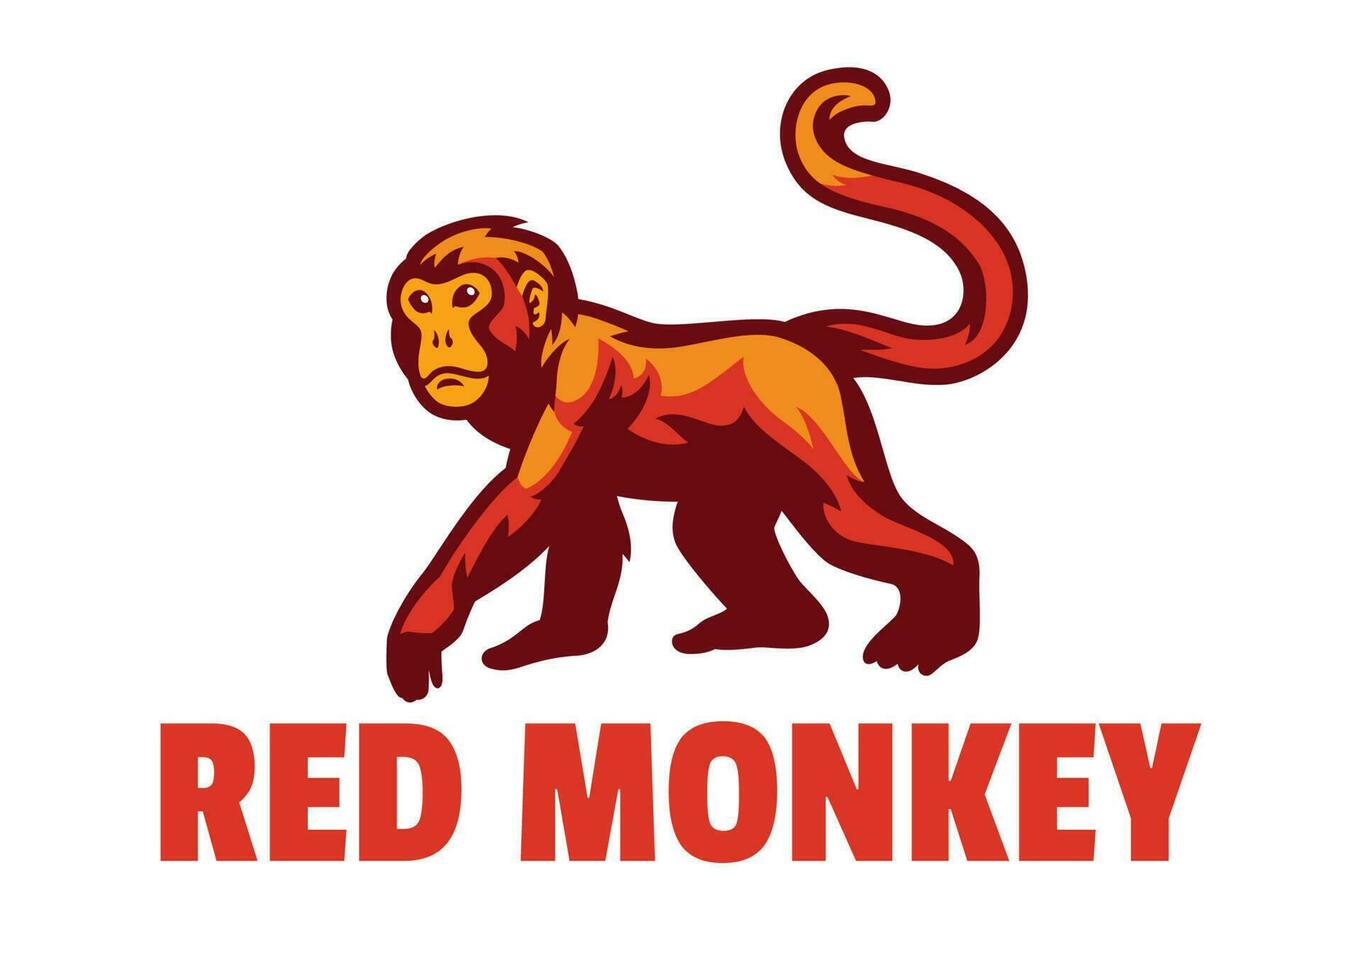 Red Monkey Mascot Logo vector